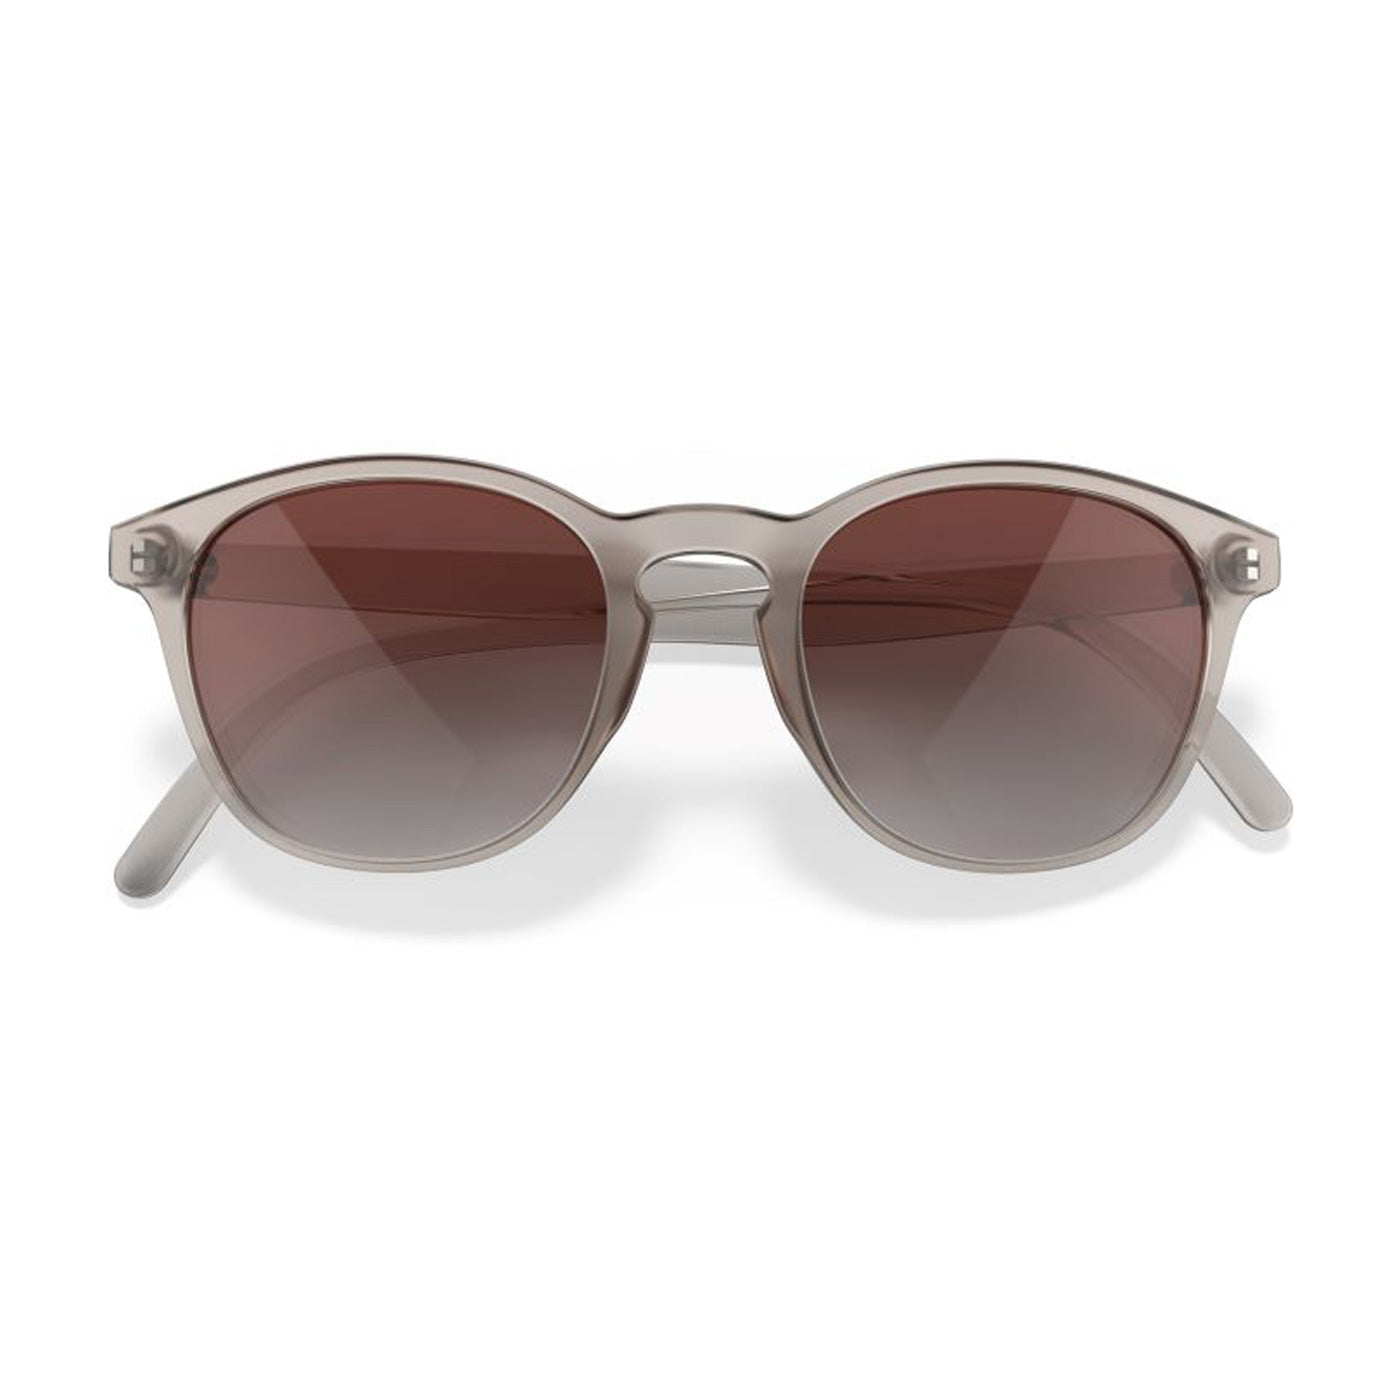 Yuba Stone Fade sunglasses by Sunski